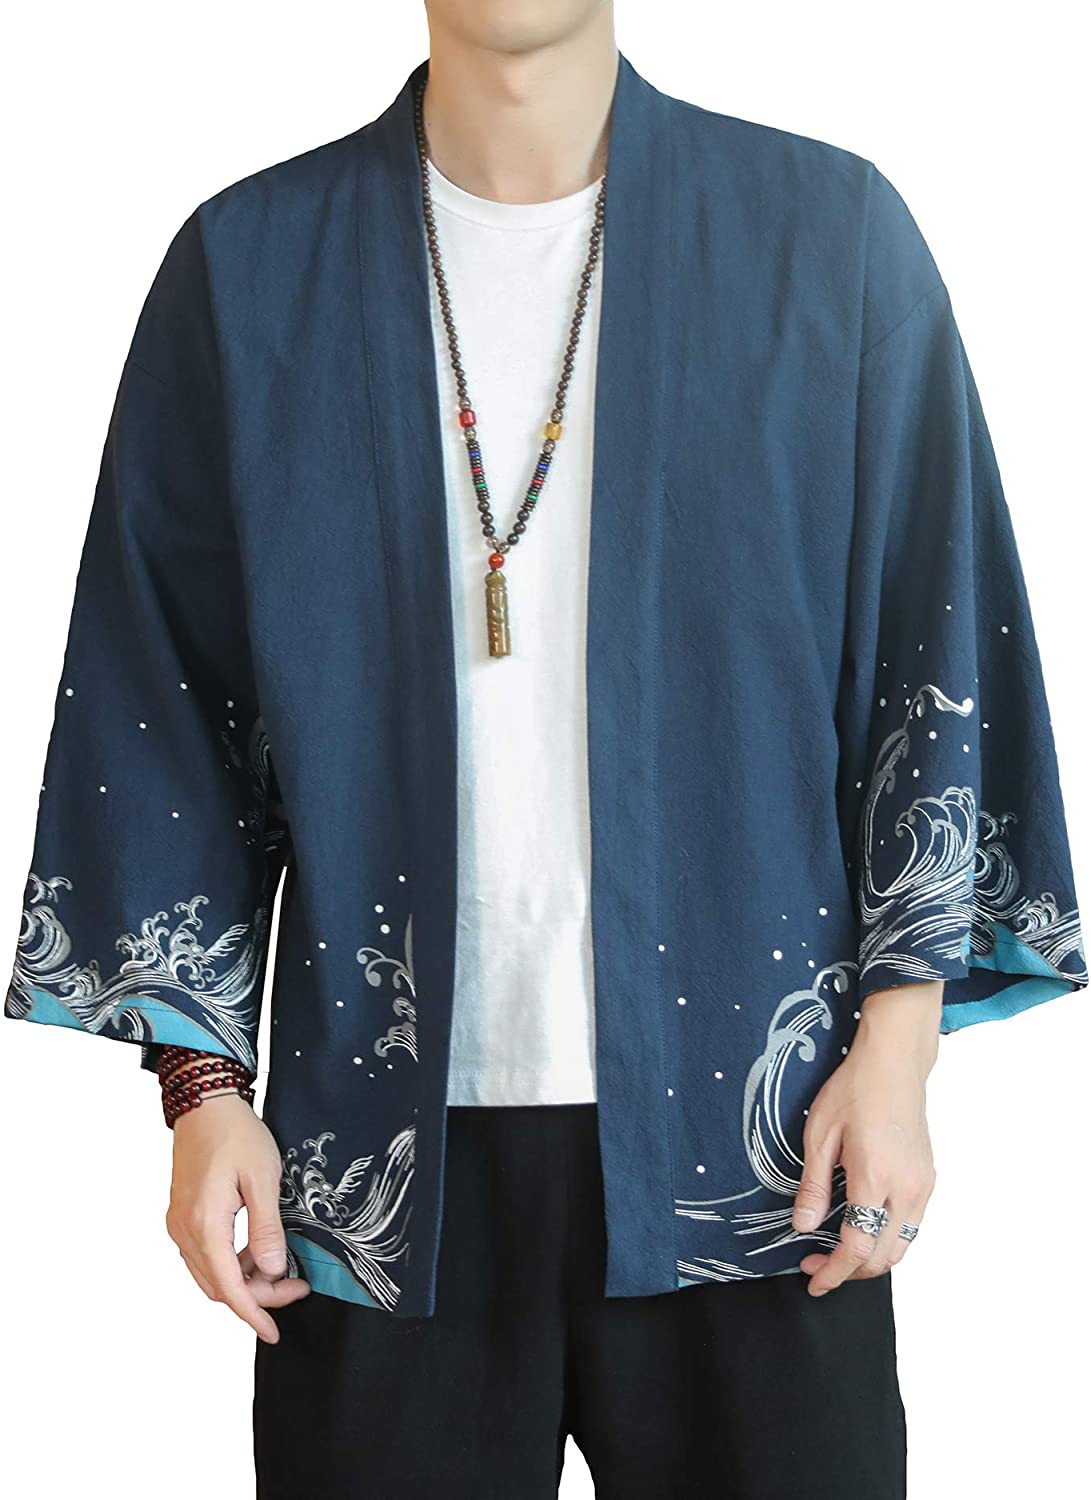 PRIJOUHE Mens Japanese Kimono Coat Suits Loose Open Front Seven Sleeve Kimono Cardigan Jacket with Shorts 